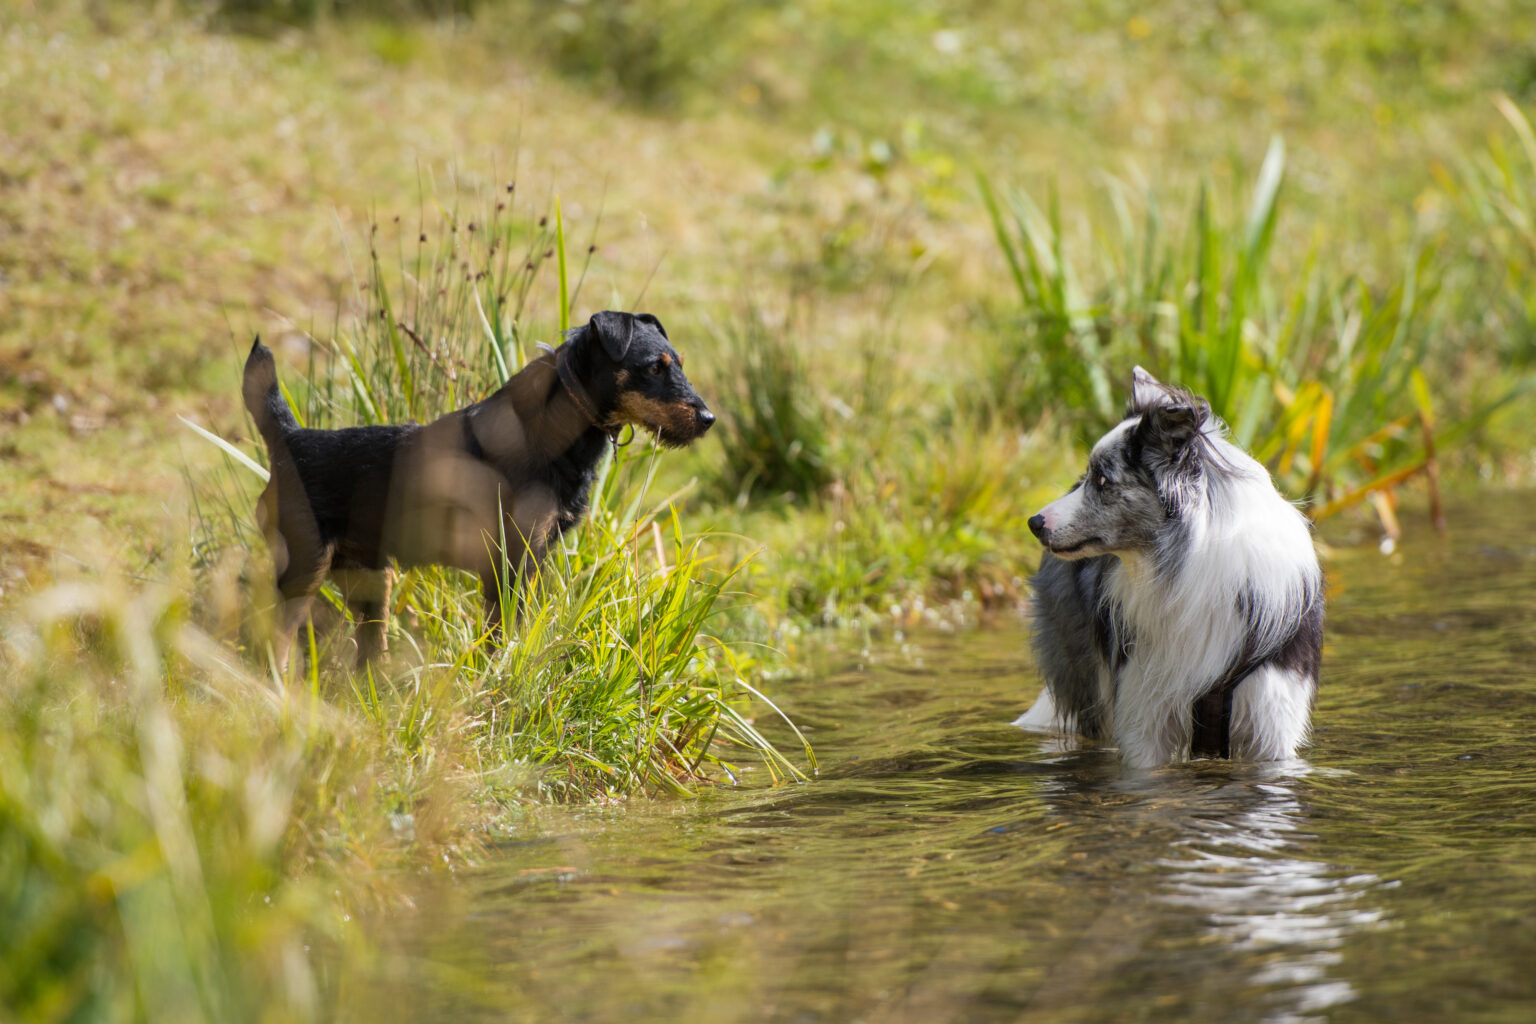 Zwei-Hunde-schauen-sich-beim-Bad-im-See-seltsam-an.jpeg